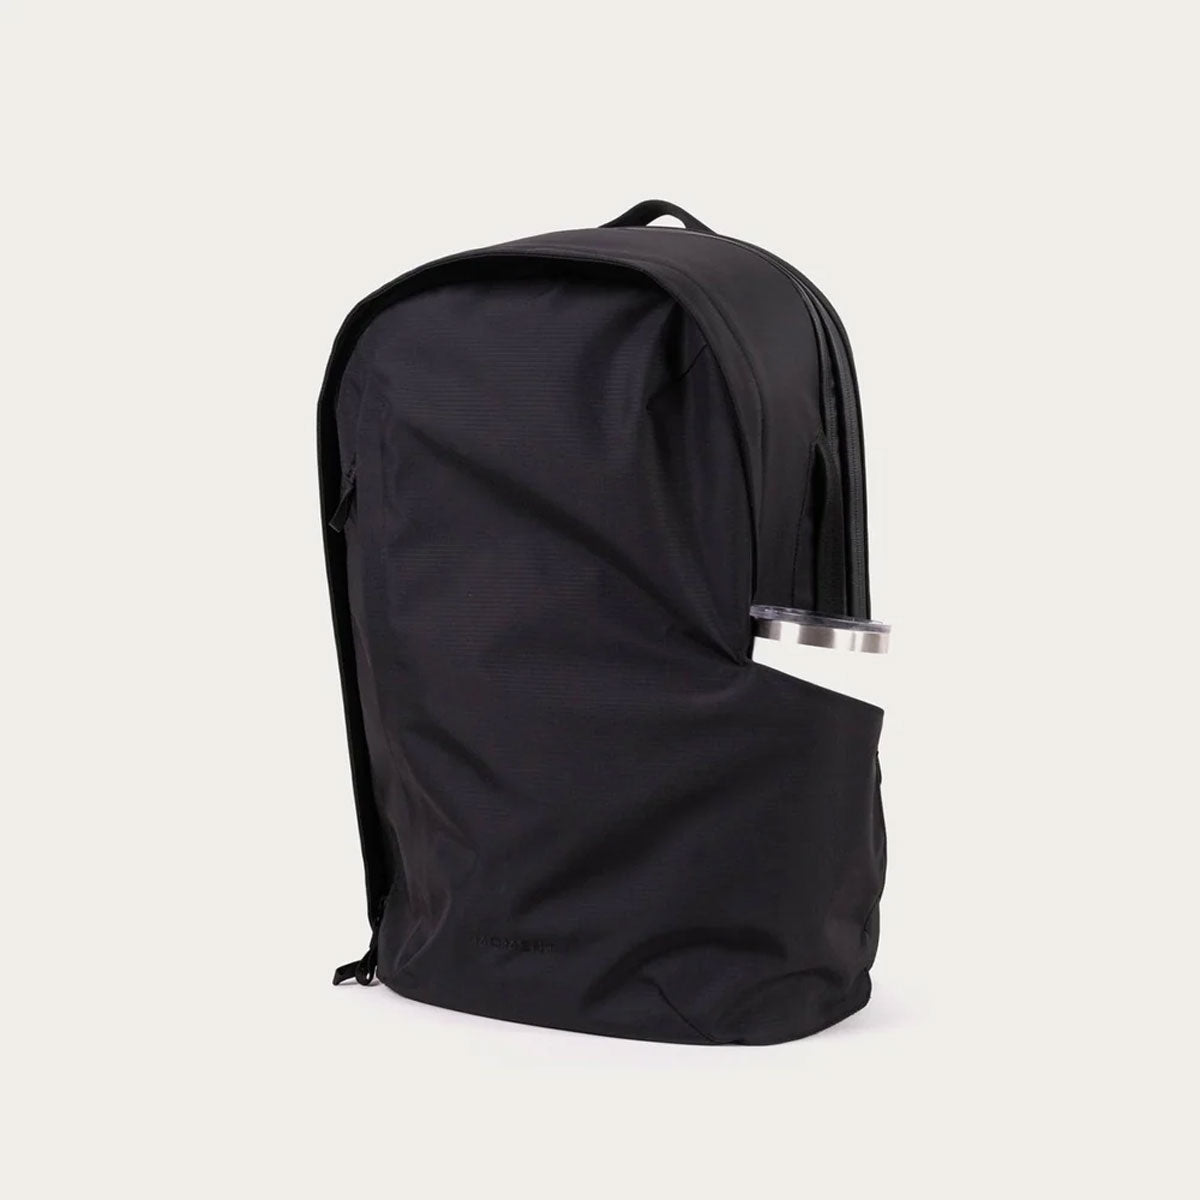 Moment : Everything Backpack 28L Weekender : Black